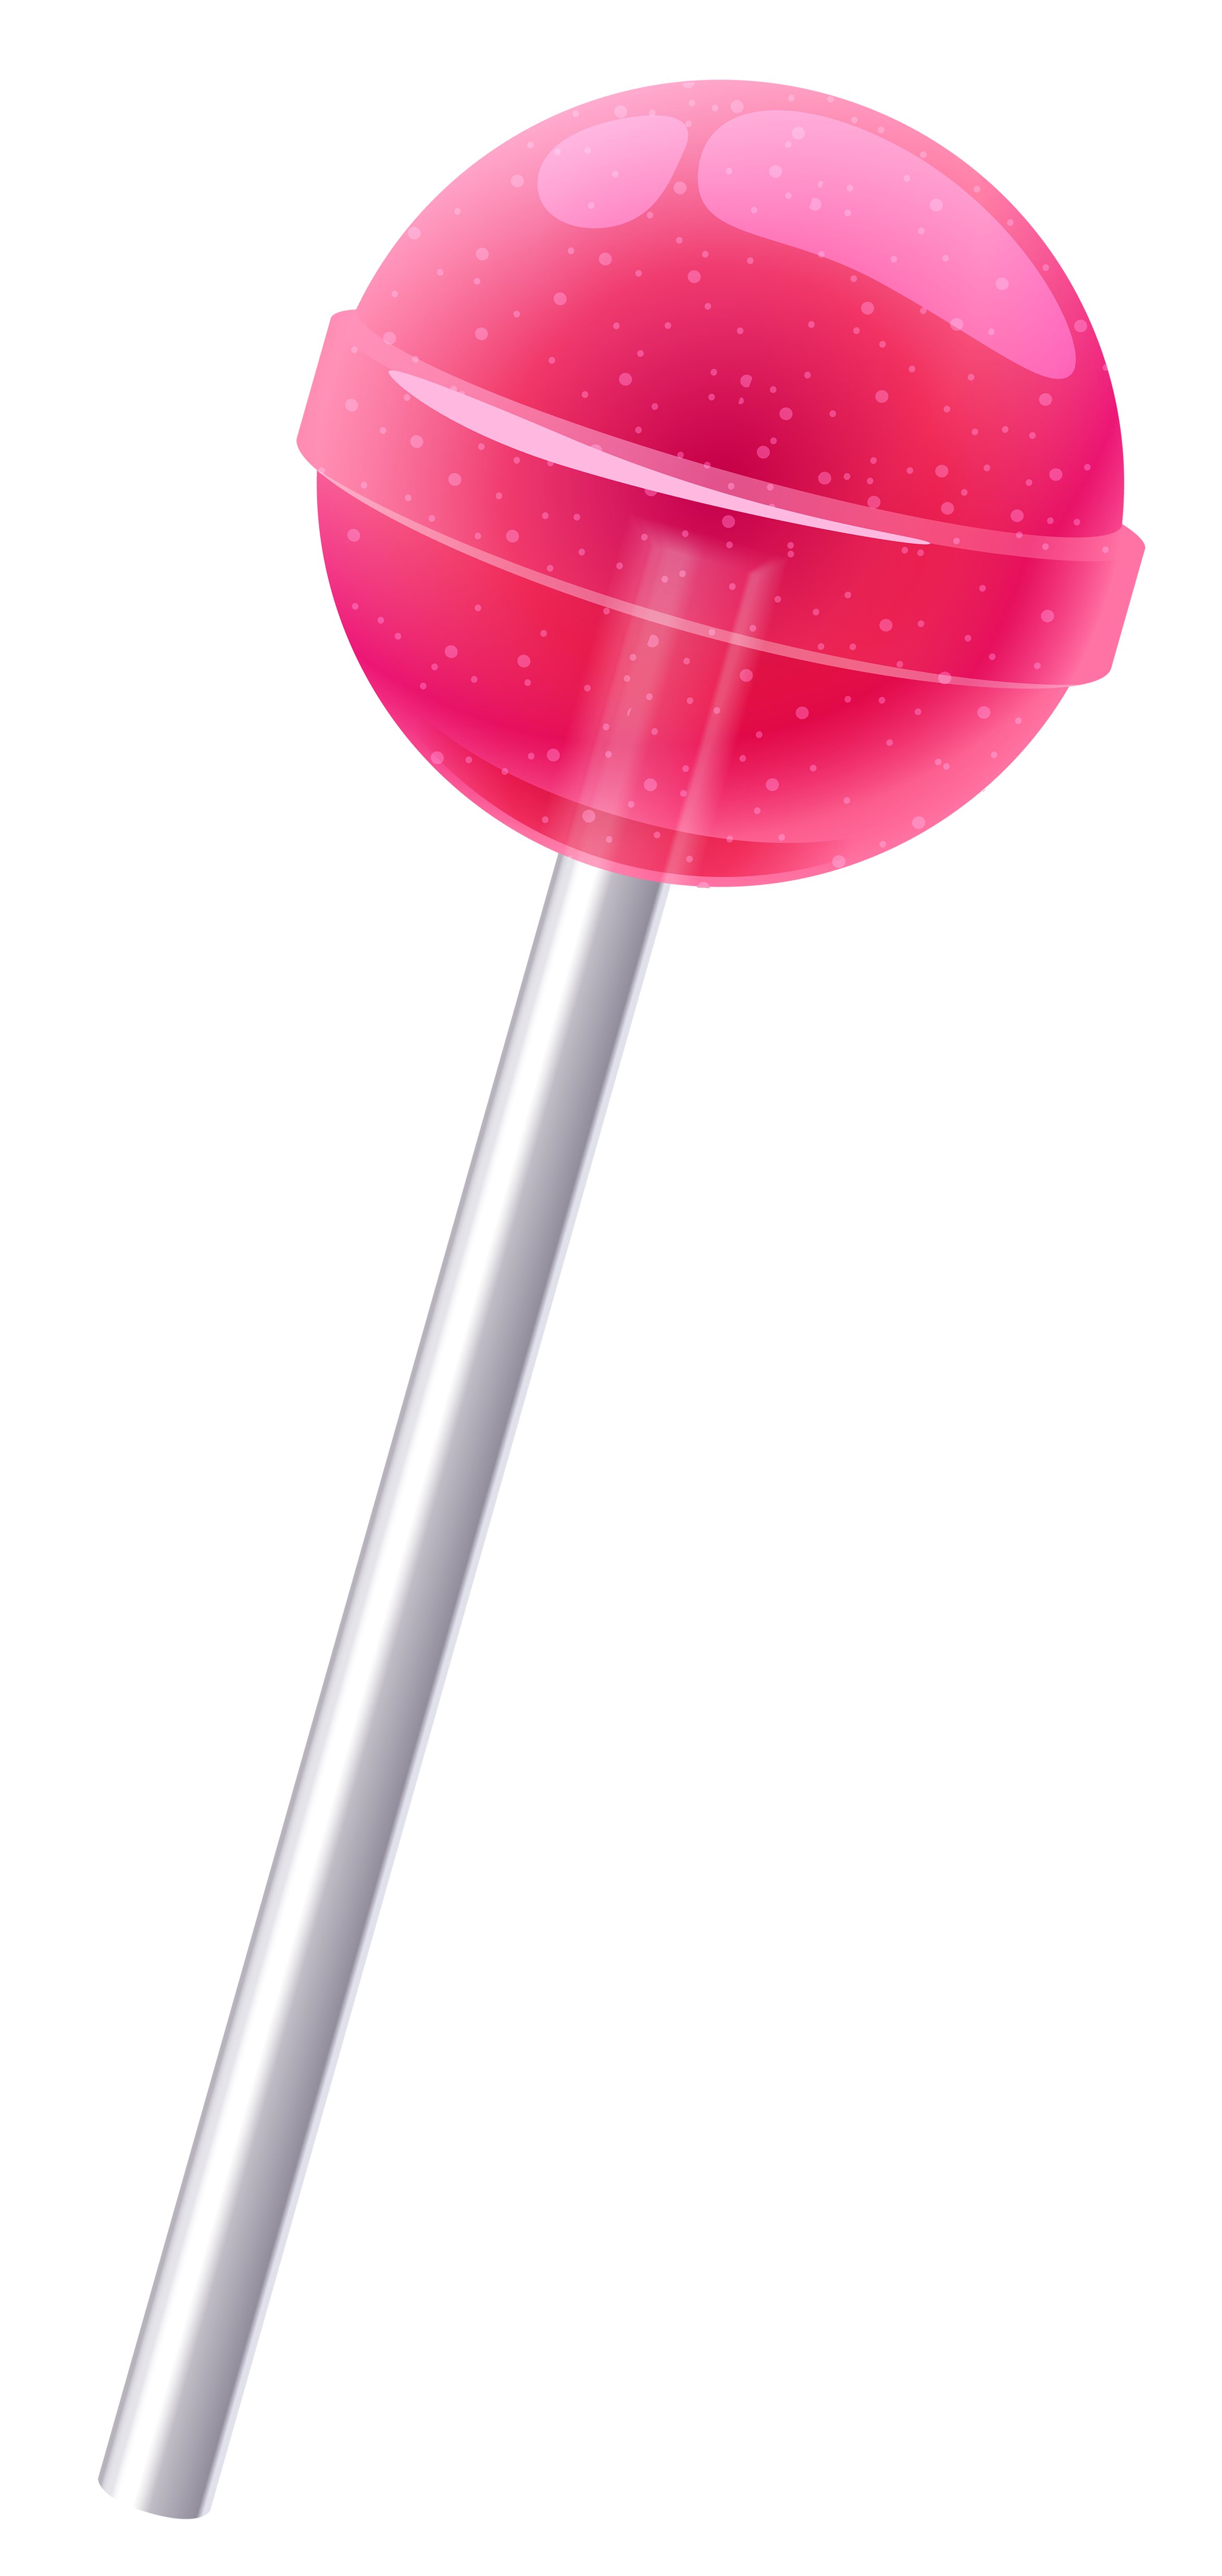 Pink Lollipop Free HQ Image PNG Image